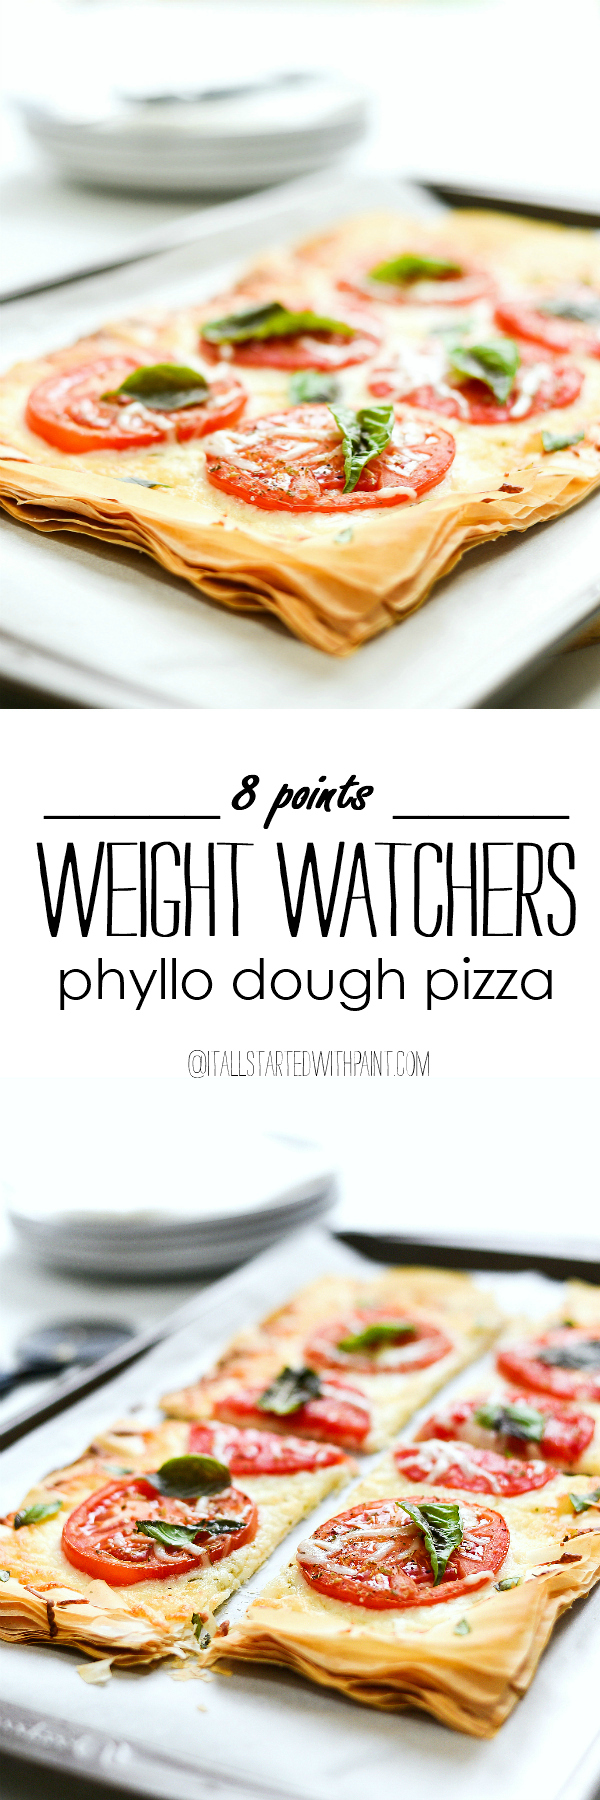 Weight Watchers Pizza Recipe - Phyllo Dough Pizza - Margherita Pizza Recipe